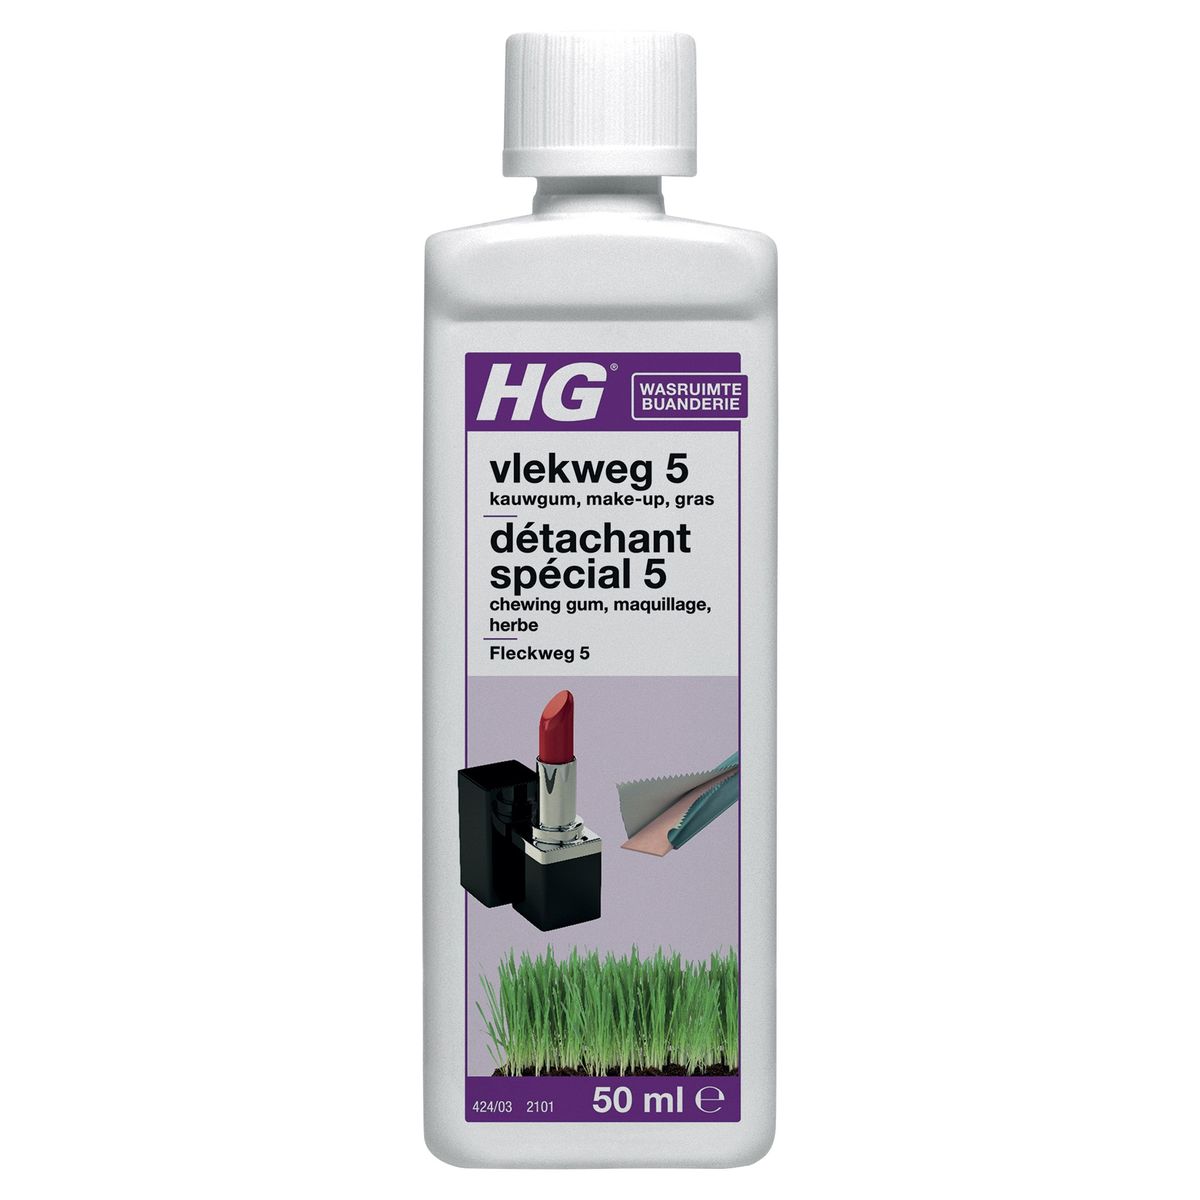 HG Détachant Spécial 5 Chewing Gum, Maquillage, Herbe 50 ml